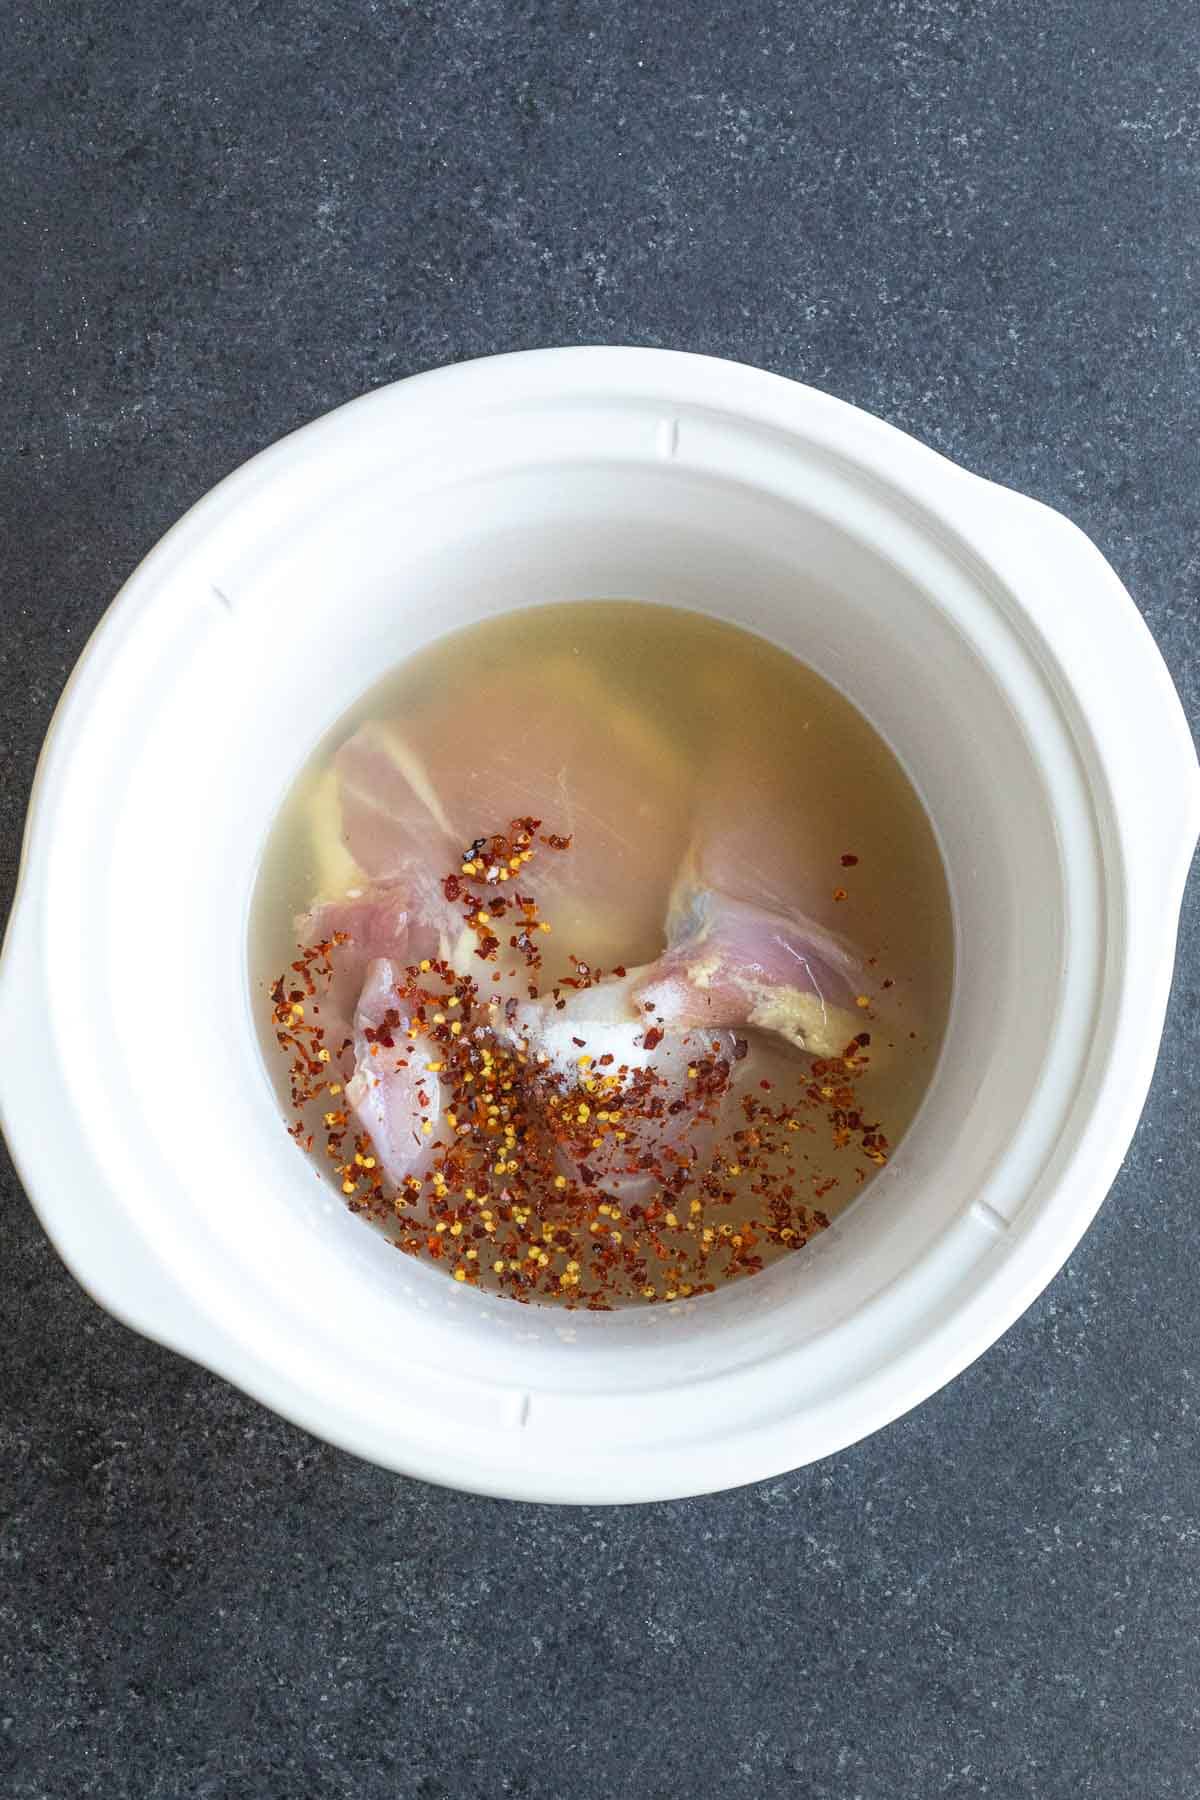 Ingredients for Carolina BBQ Vinegar Shredded Chicken in slow cooker